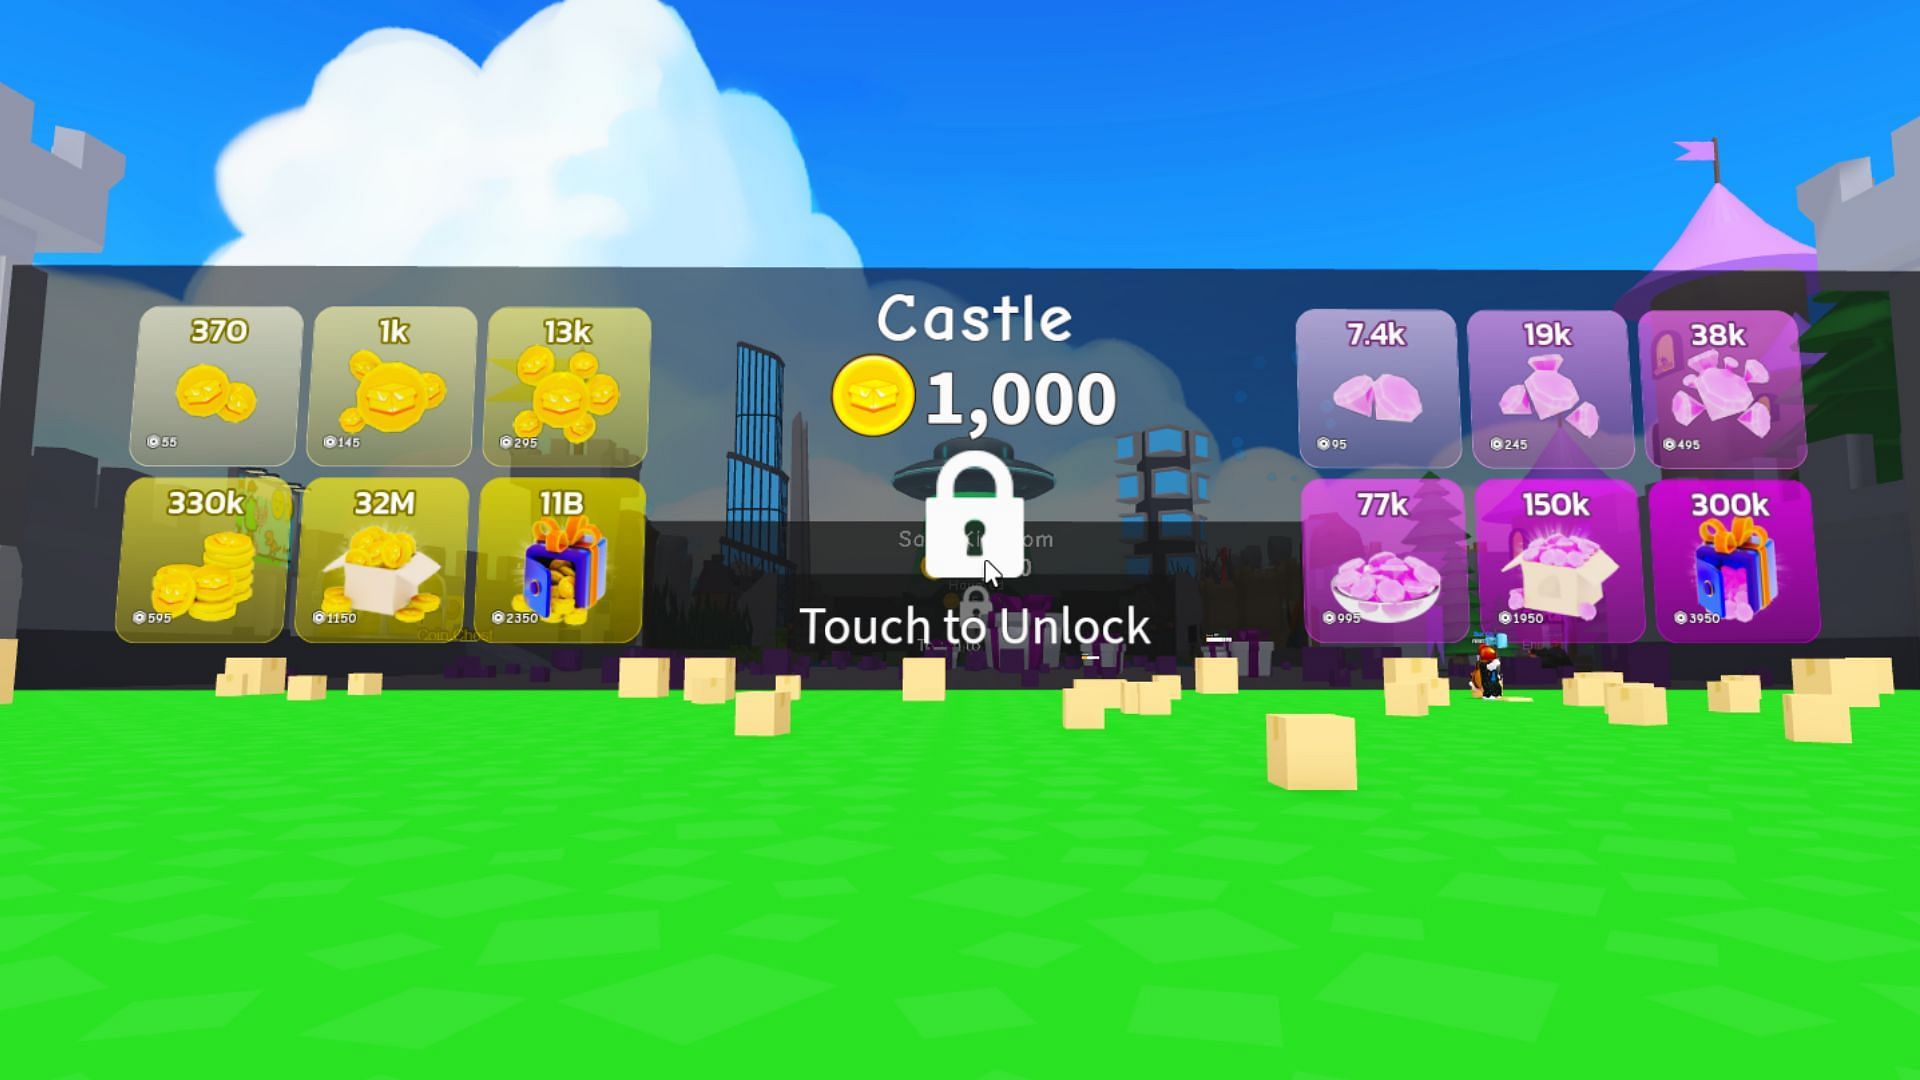 Unlock in-game items in Unboxing Simulator (Image via Roblox)